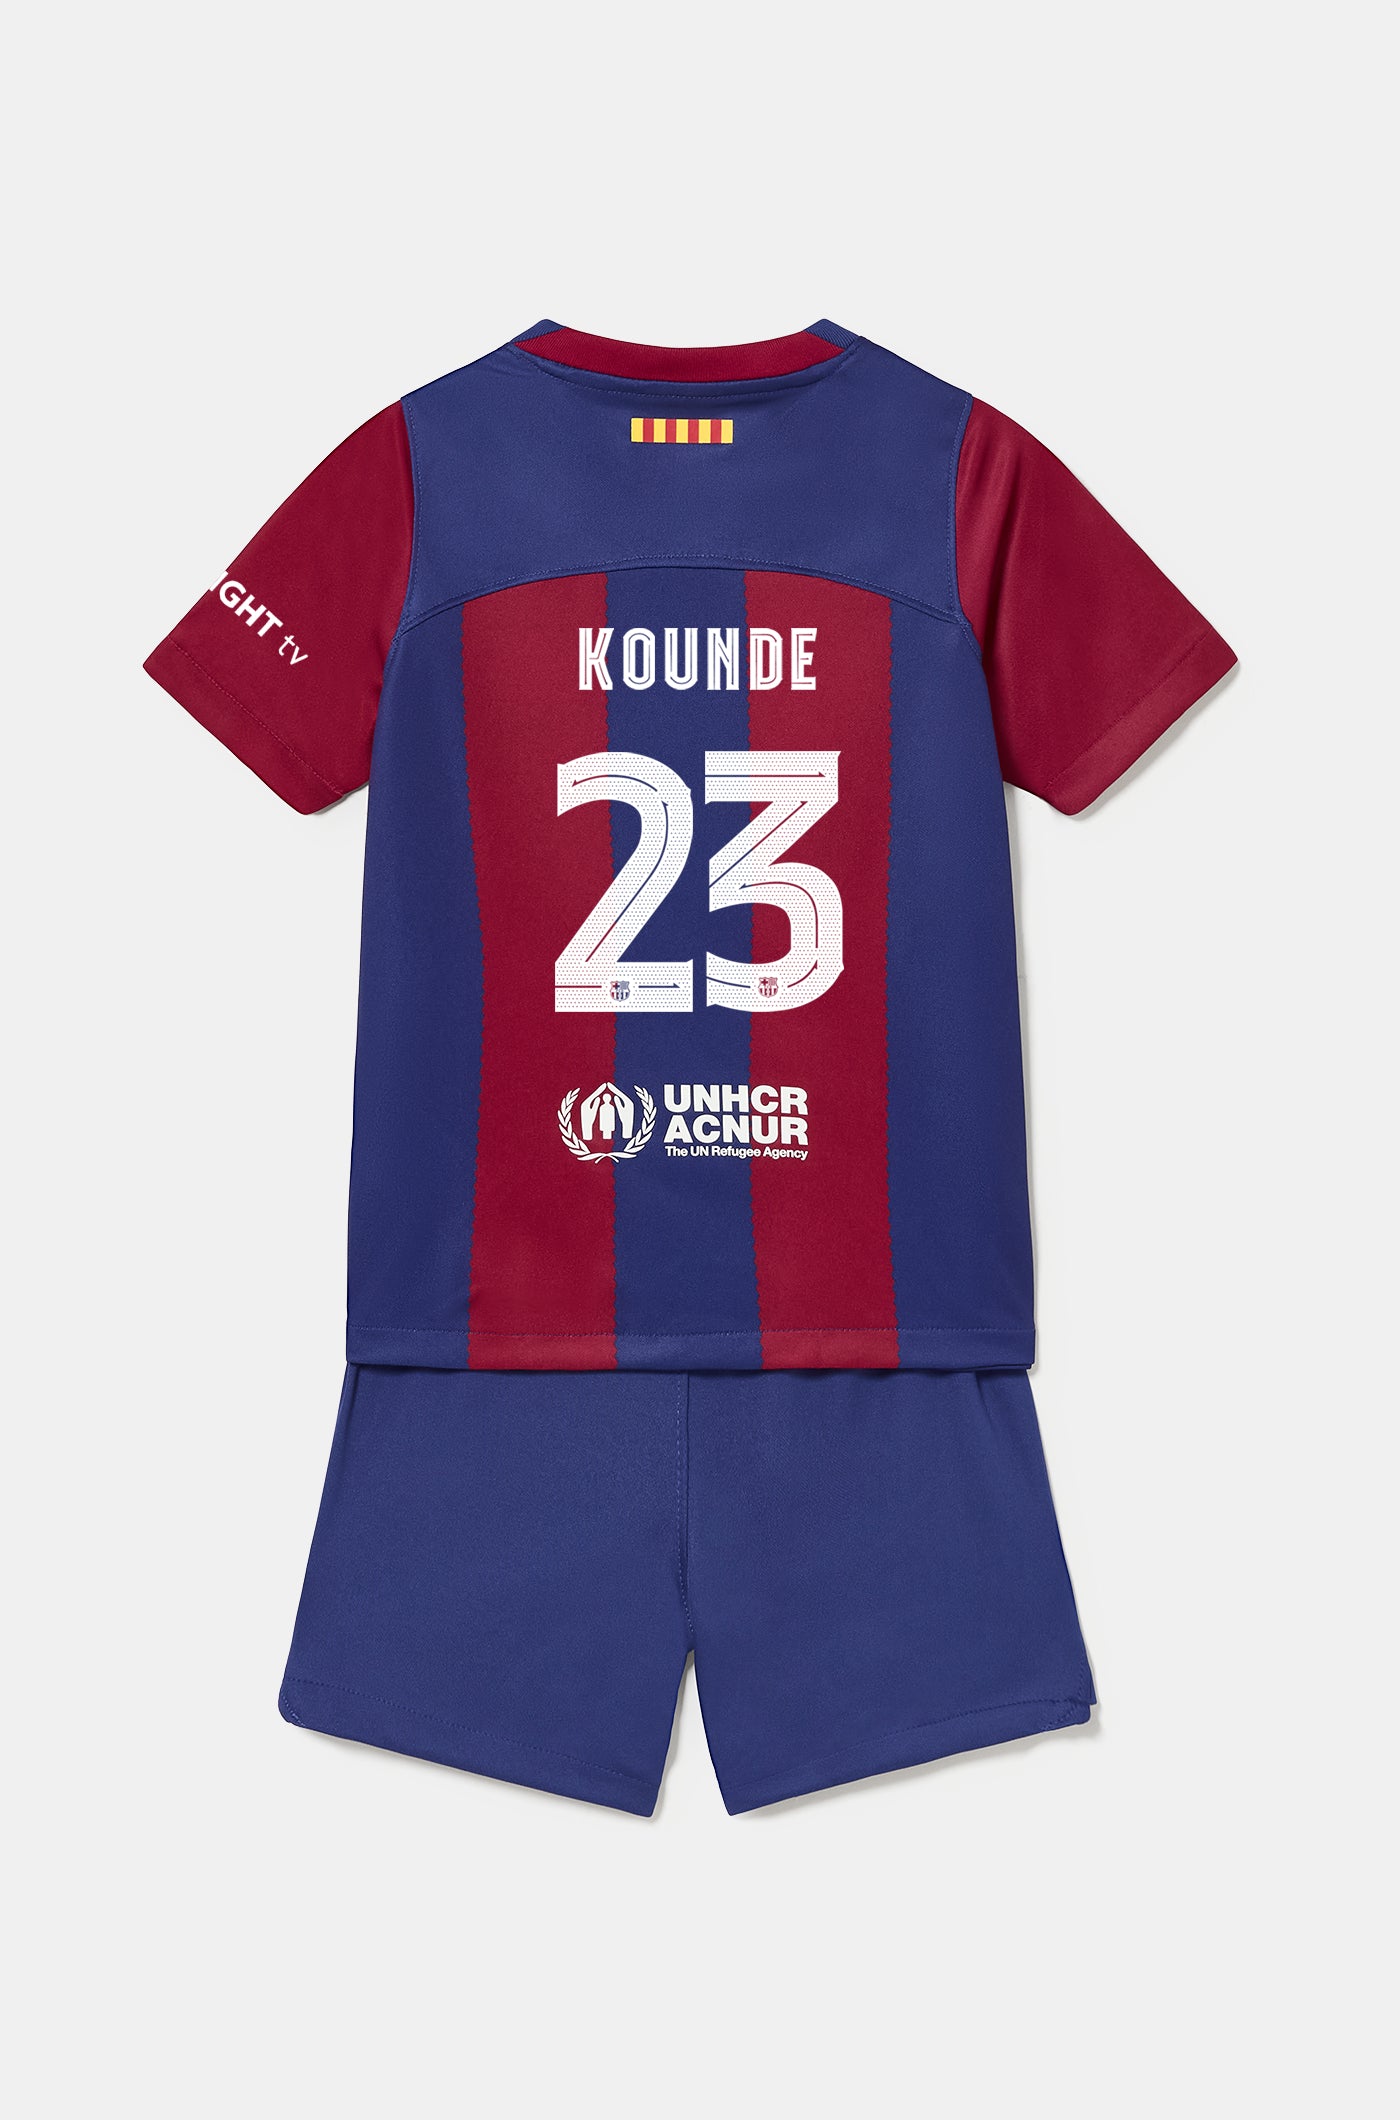 Conjunt primer equipament FC Barcelona 23/24 - Nen/a petit/a - KOUNDE